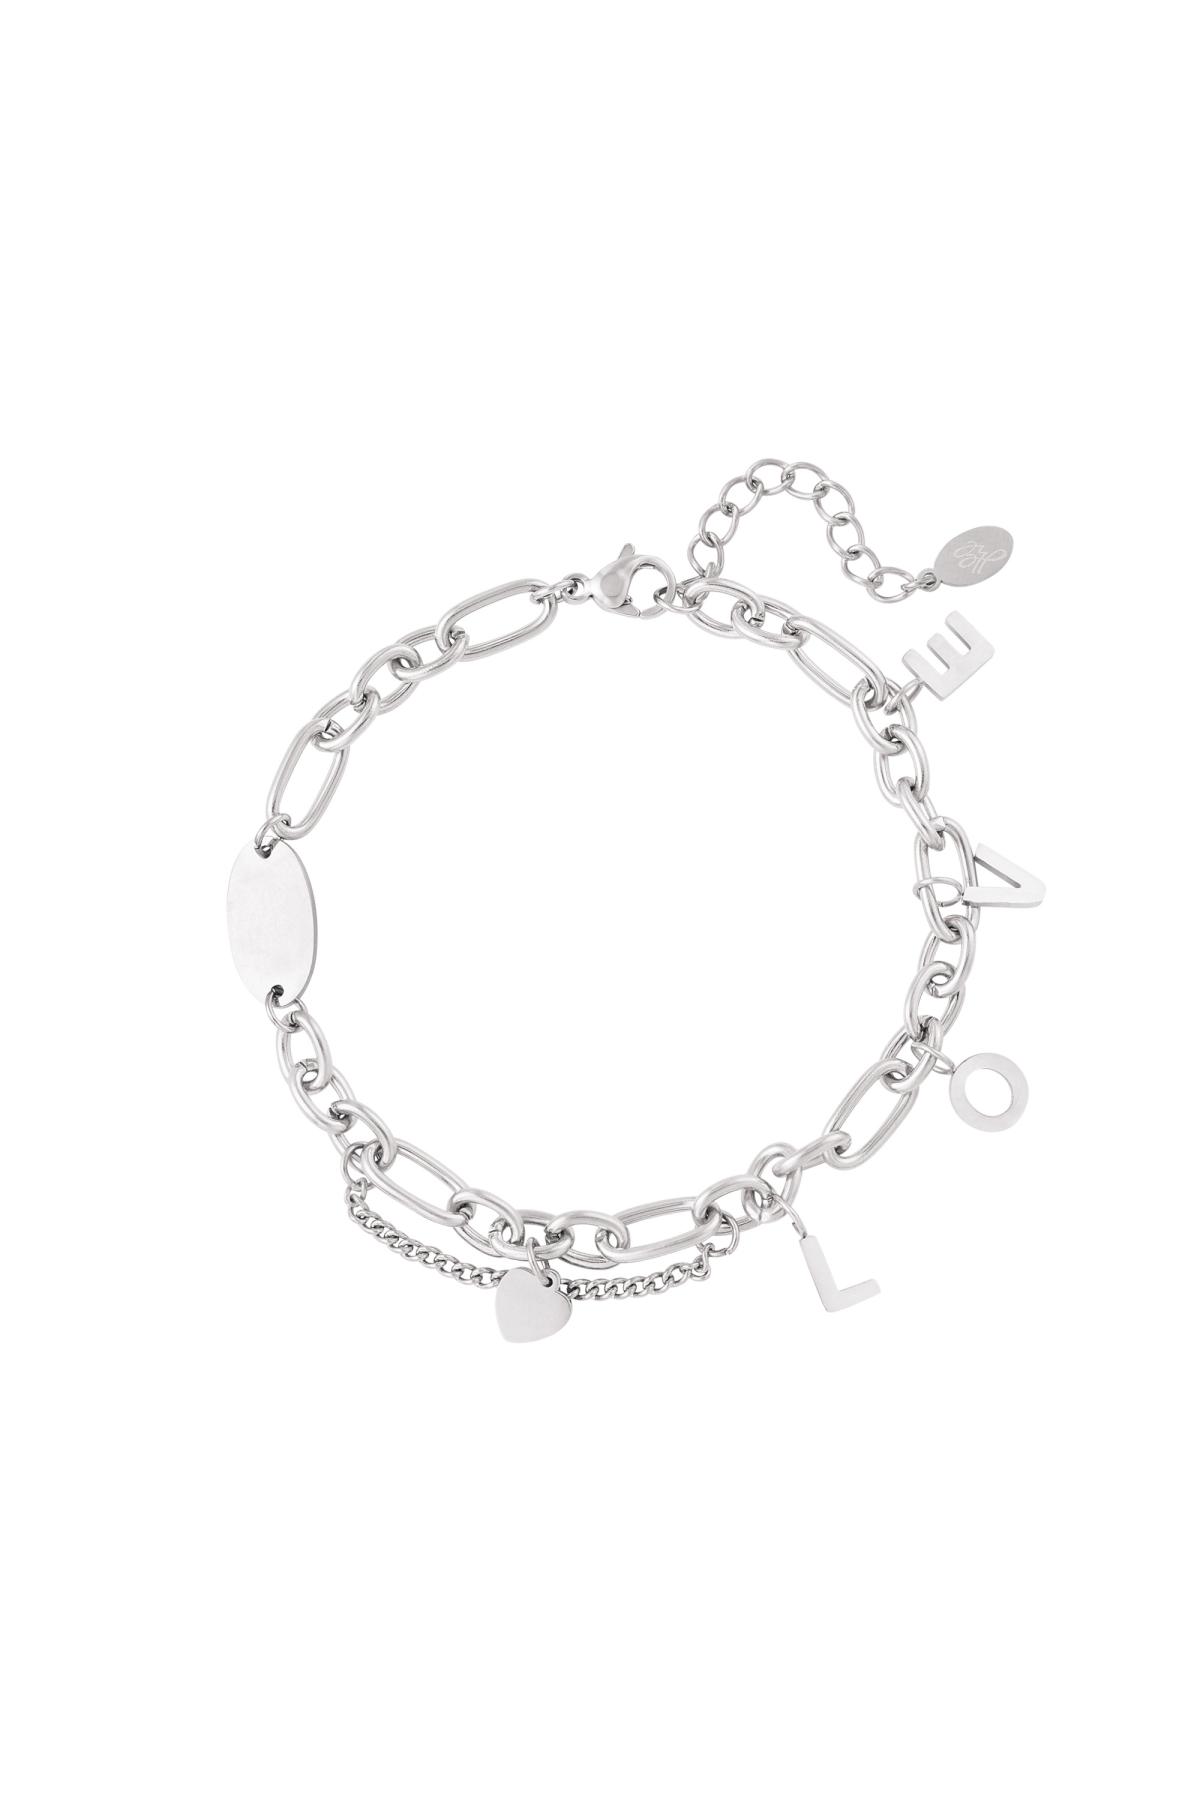 Bracelet chunky love Silver Stainless Steel h5 